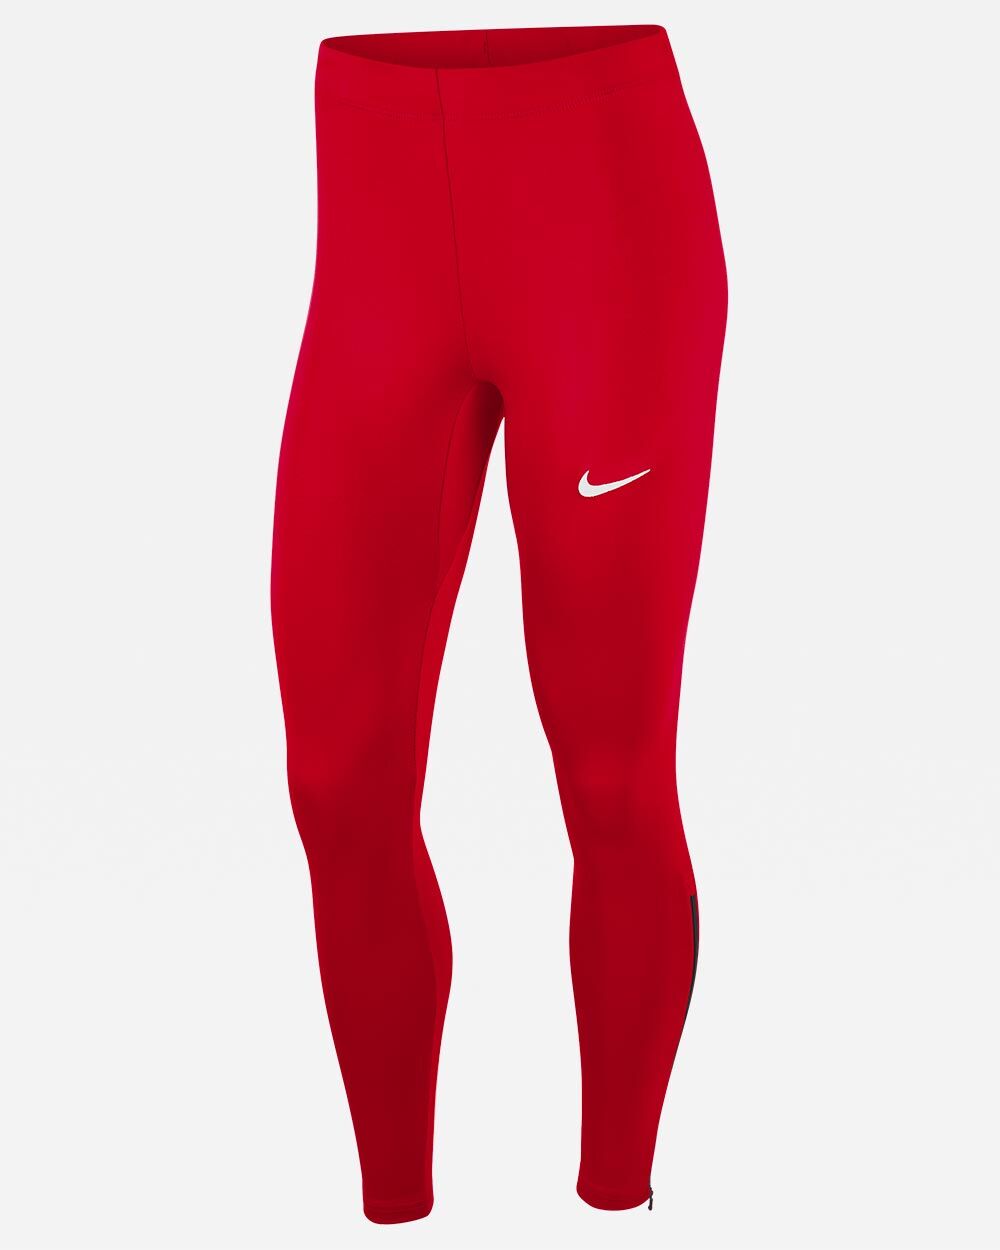 Mallas largas Nike Stock Rojo para Mujeres - NT0314-657